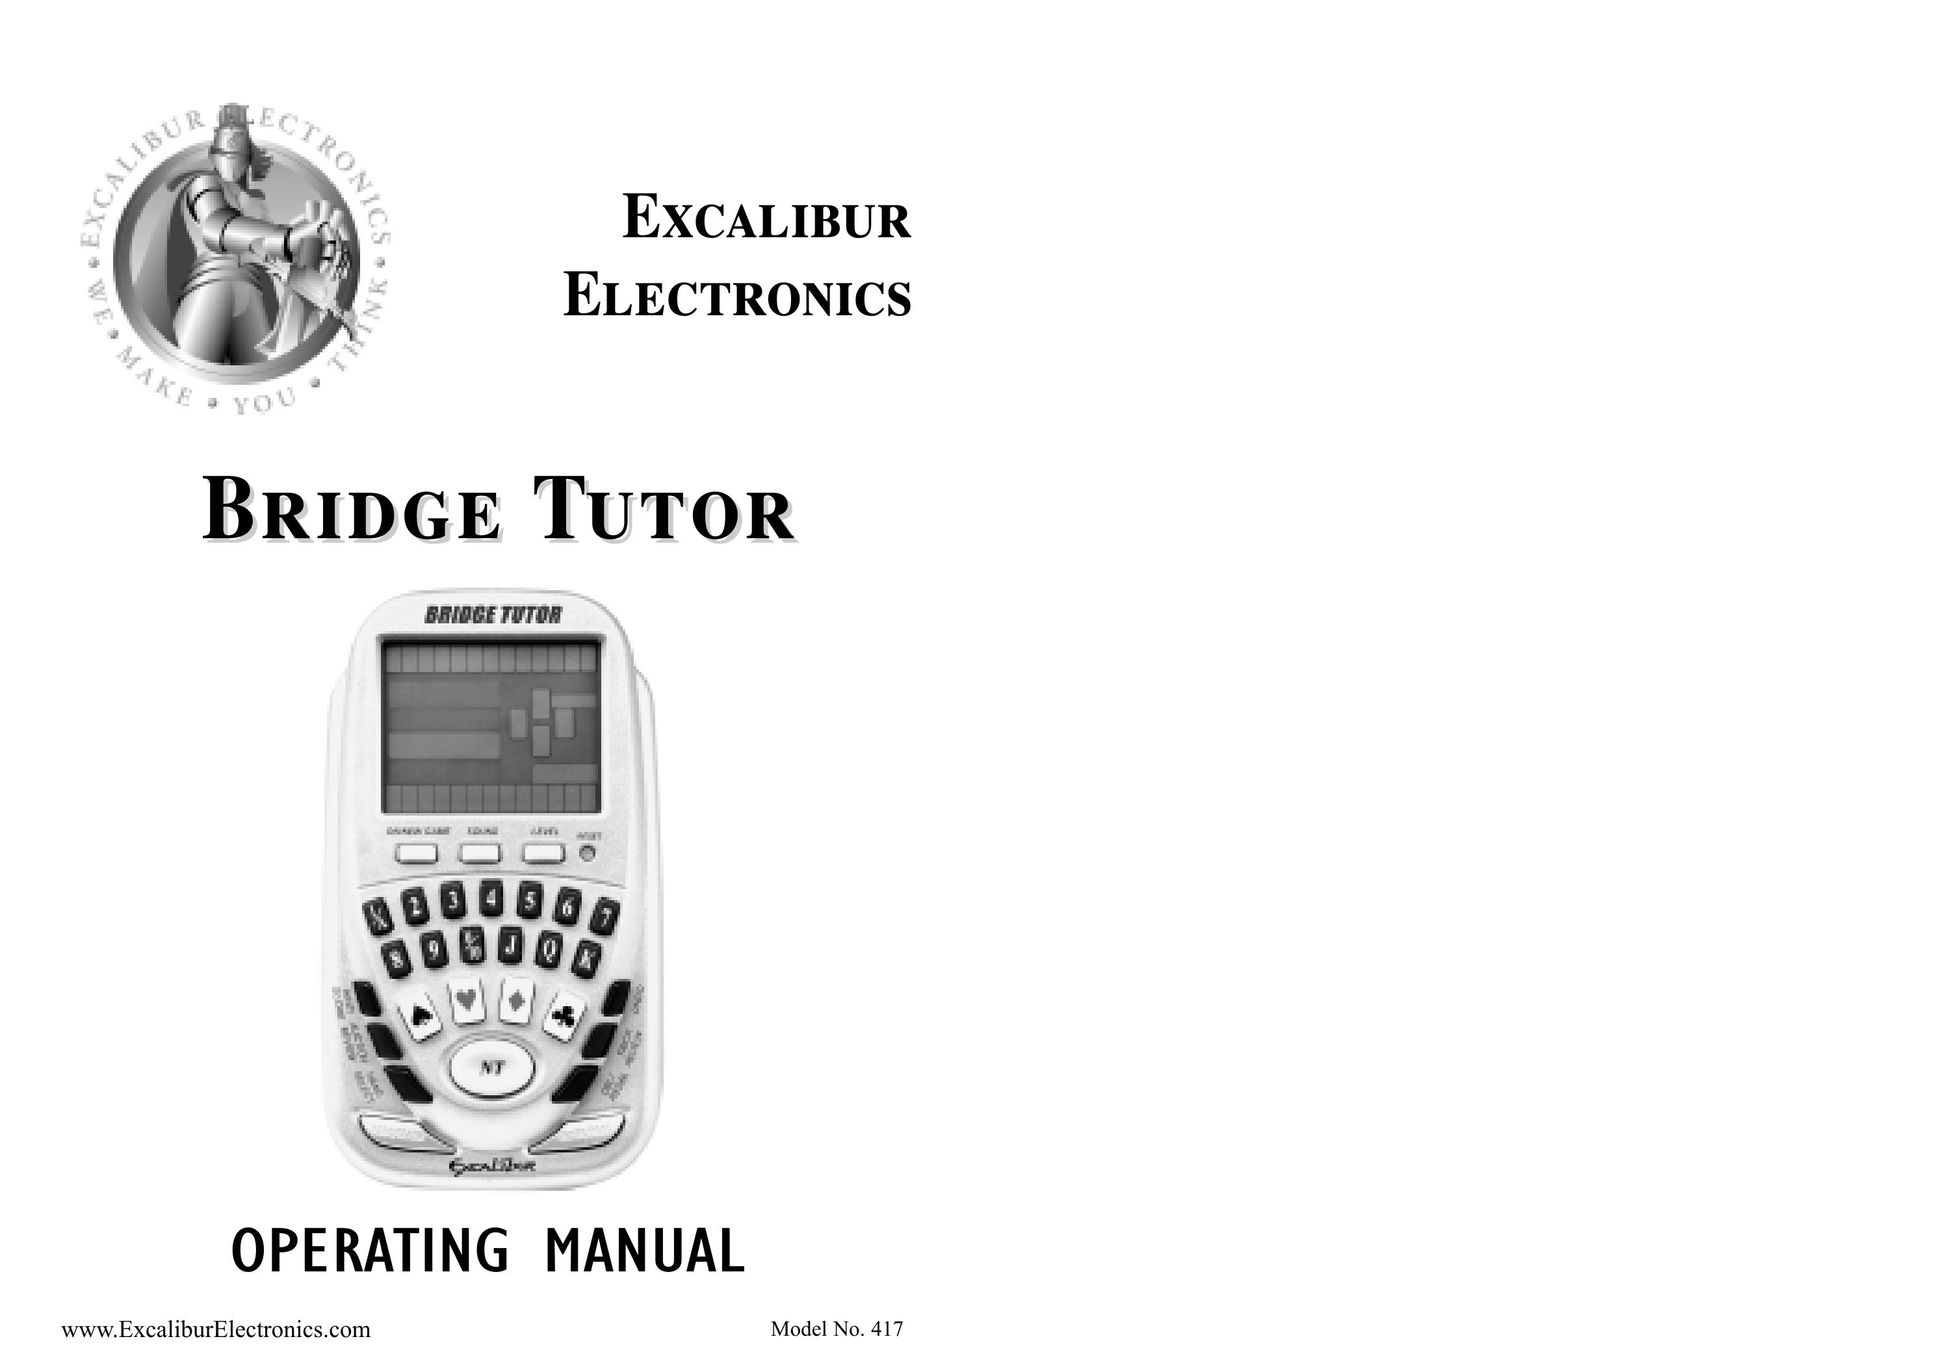 Excalibur electronic 417 Games User Manual